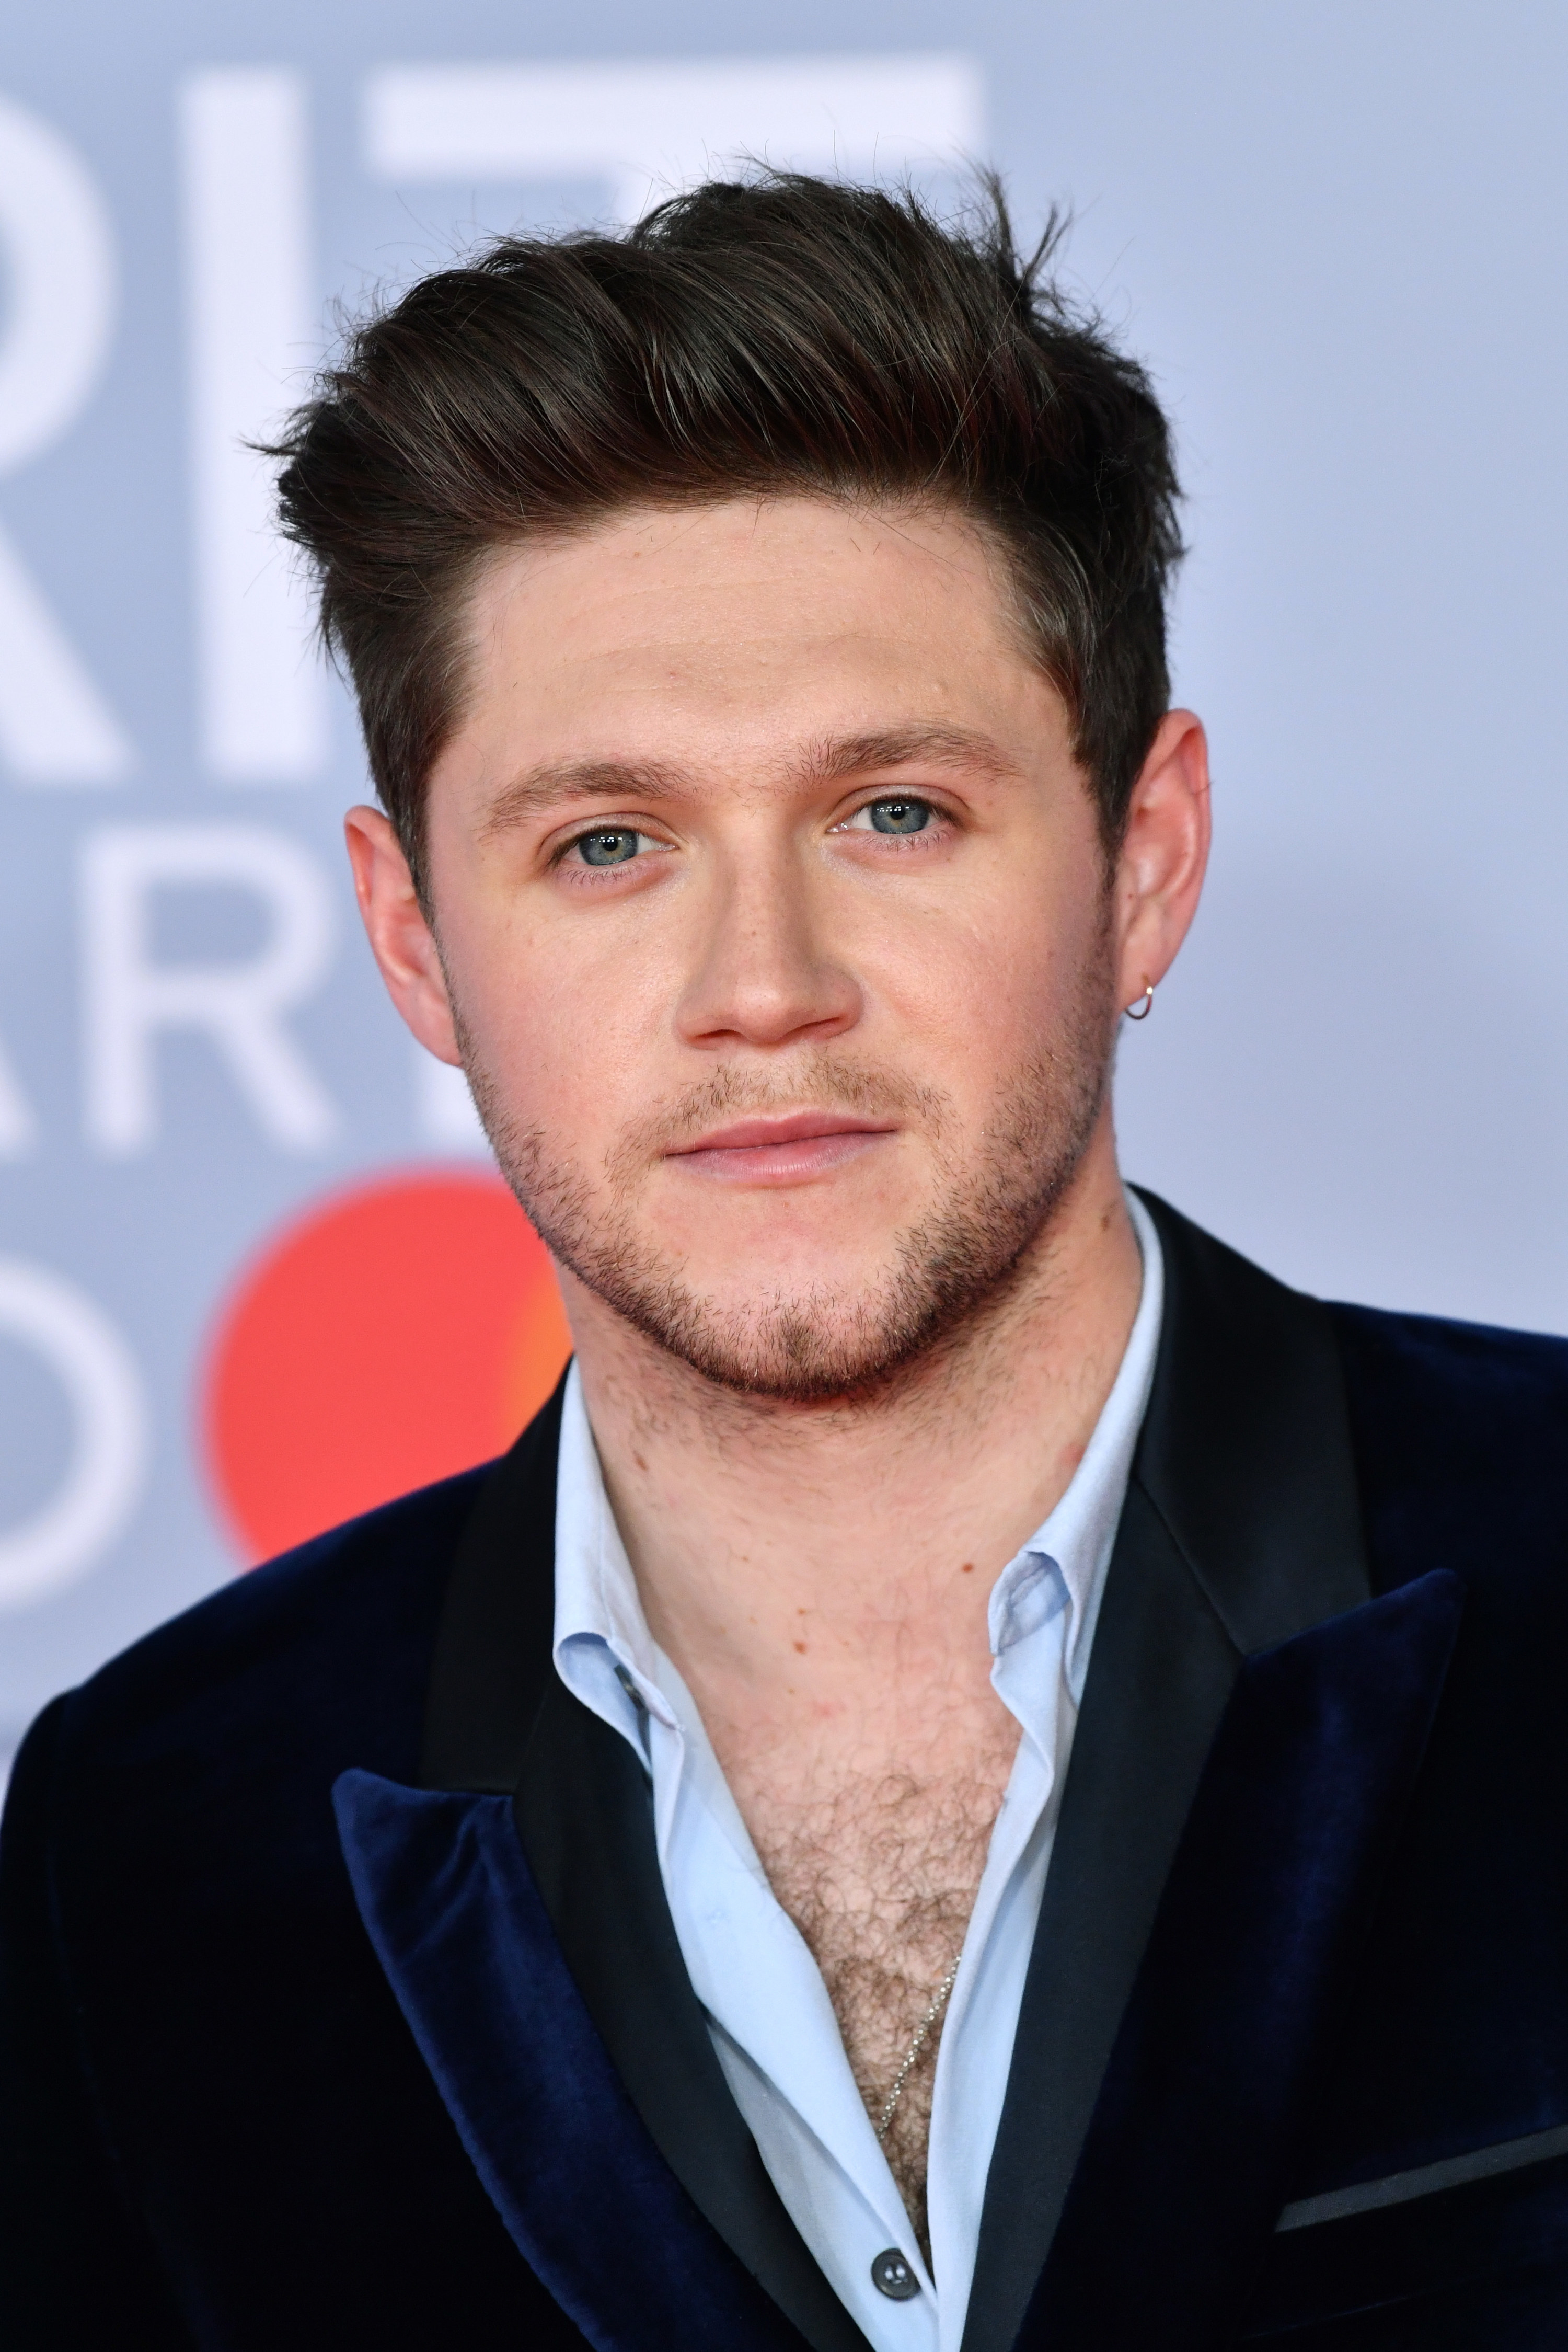 Niall Horan attending the 2020 Brit Awards